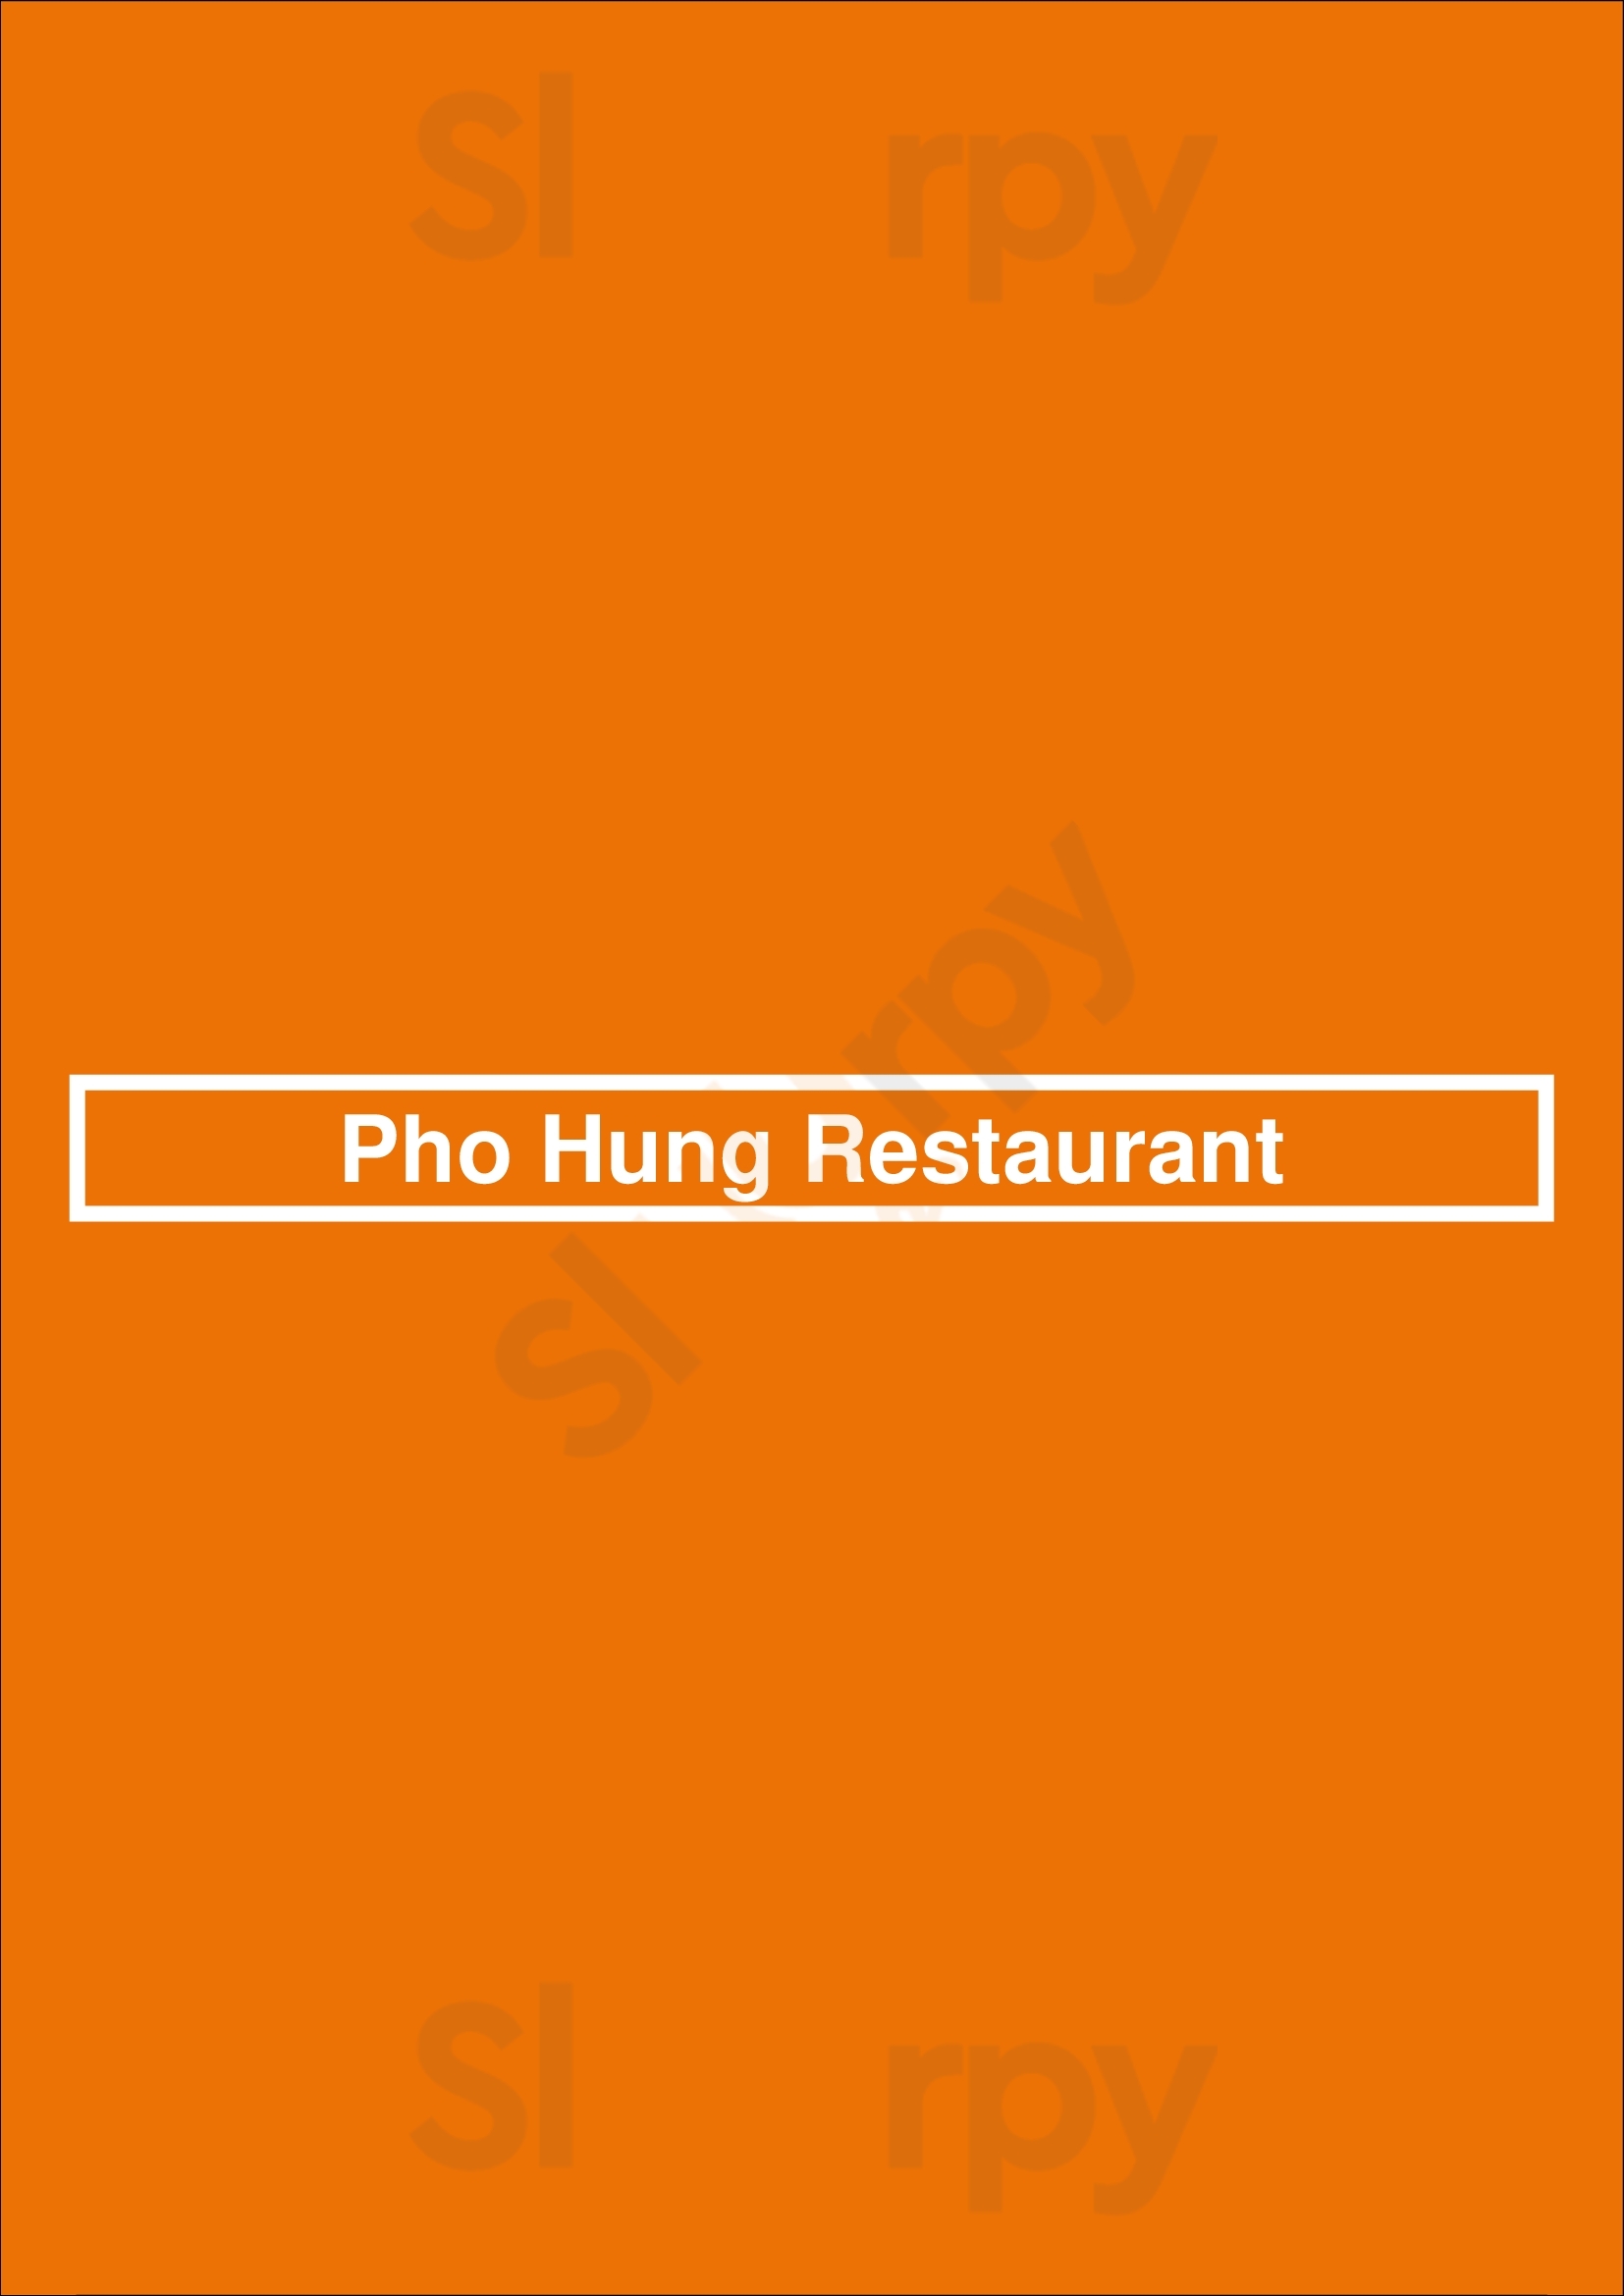 Pho Hung Restaurant Surrey Menu - 1